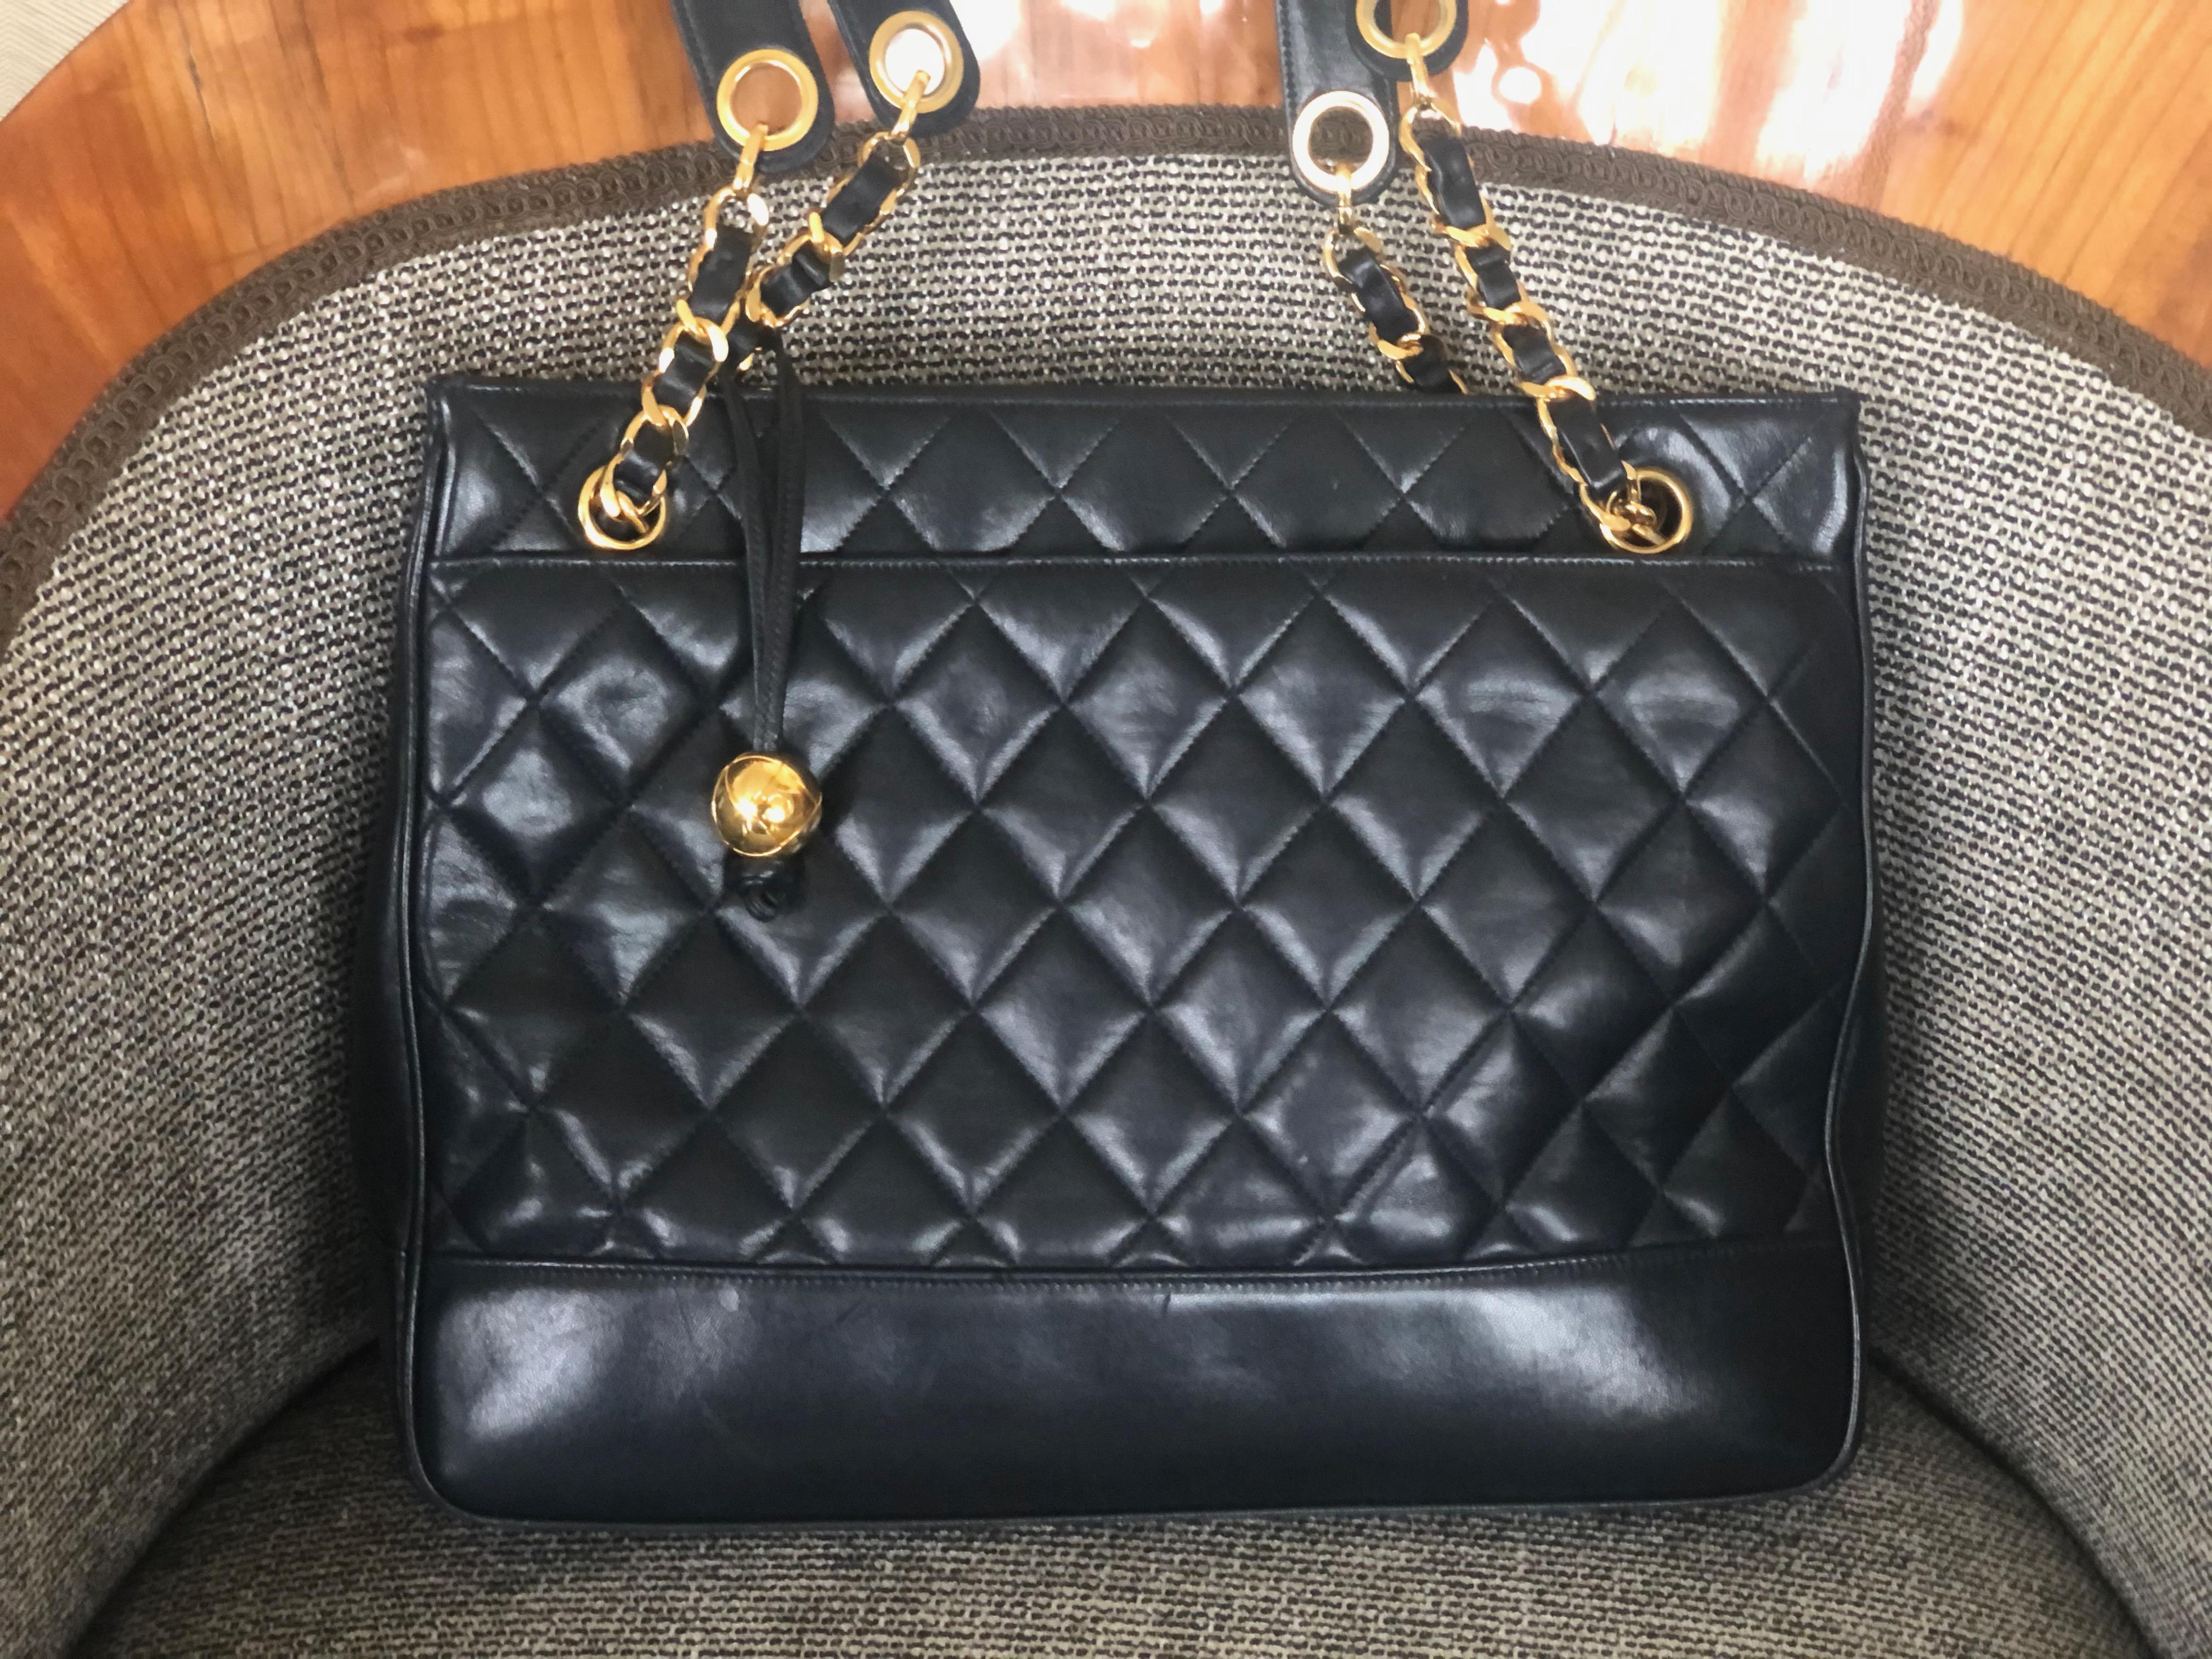 Chanel Large Black Leather Shoulder Bag with Gold Hardware and Quilted Details .
12